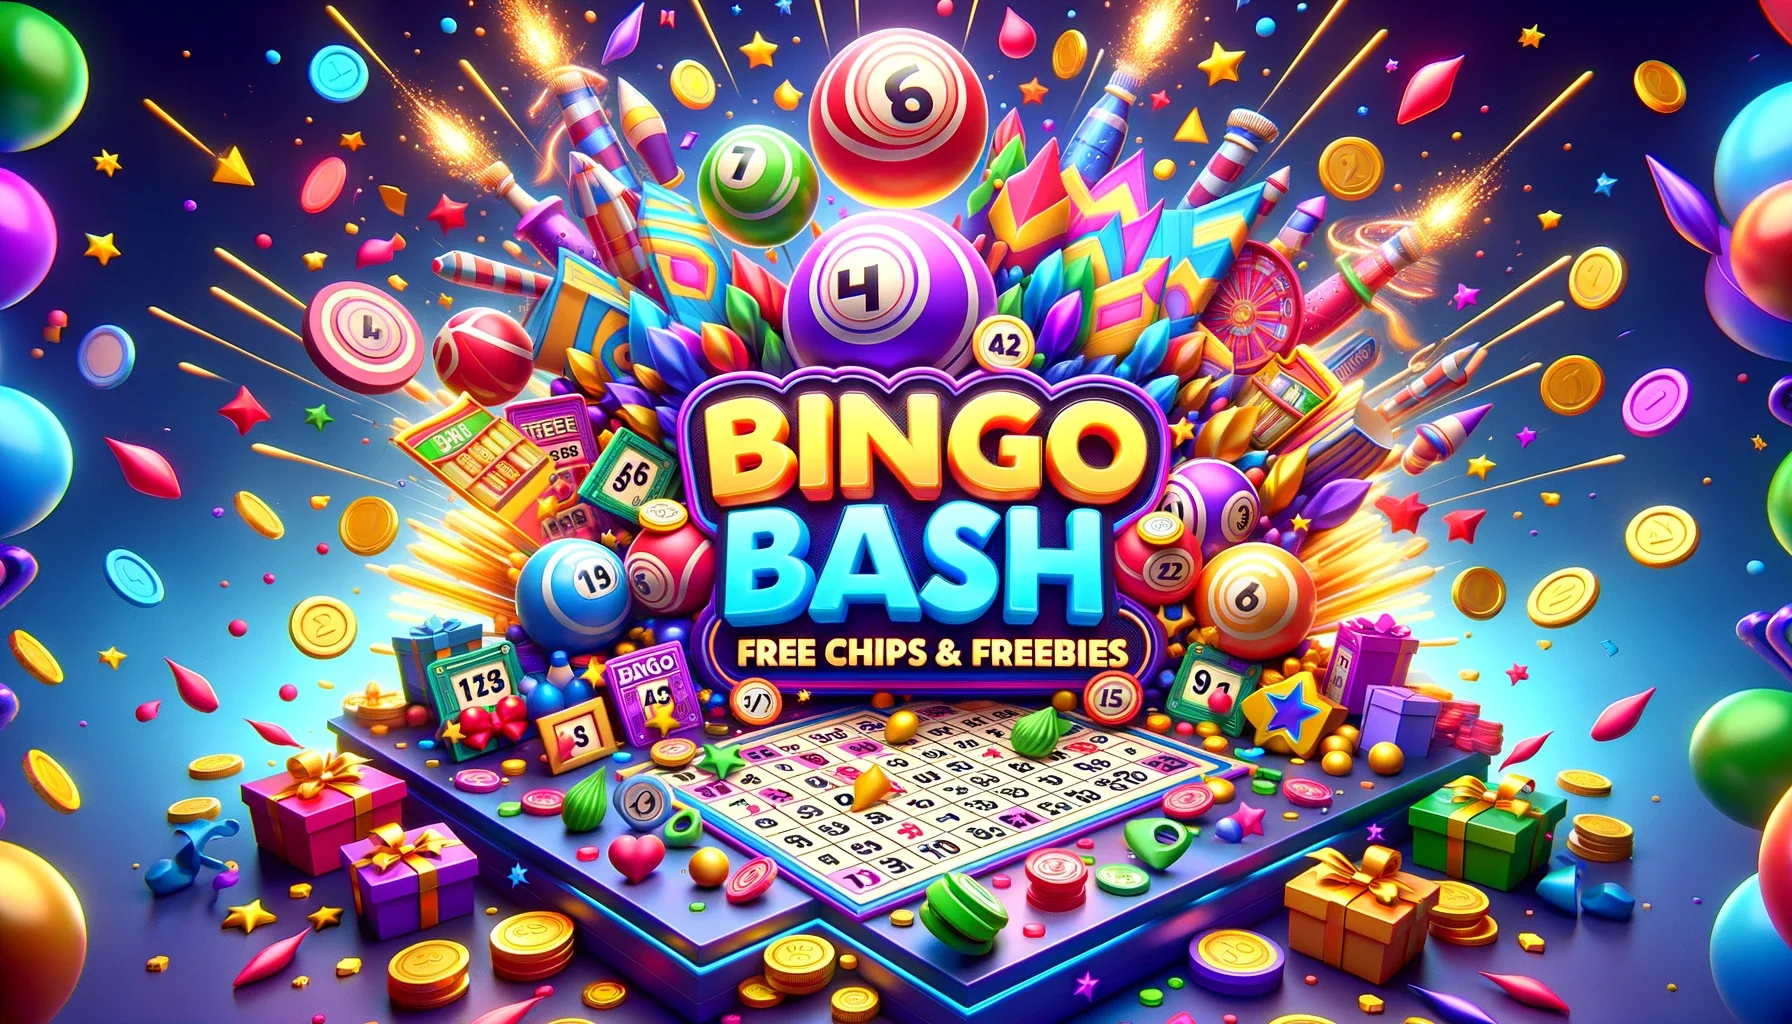 Bingo Bash Free Chips & Freebies